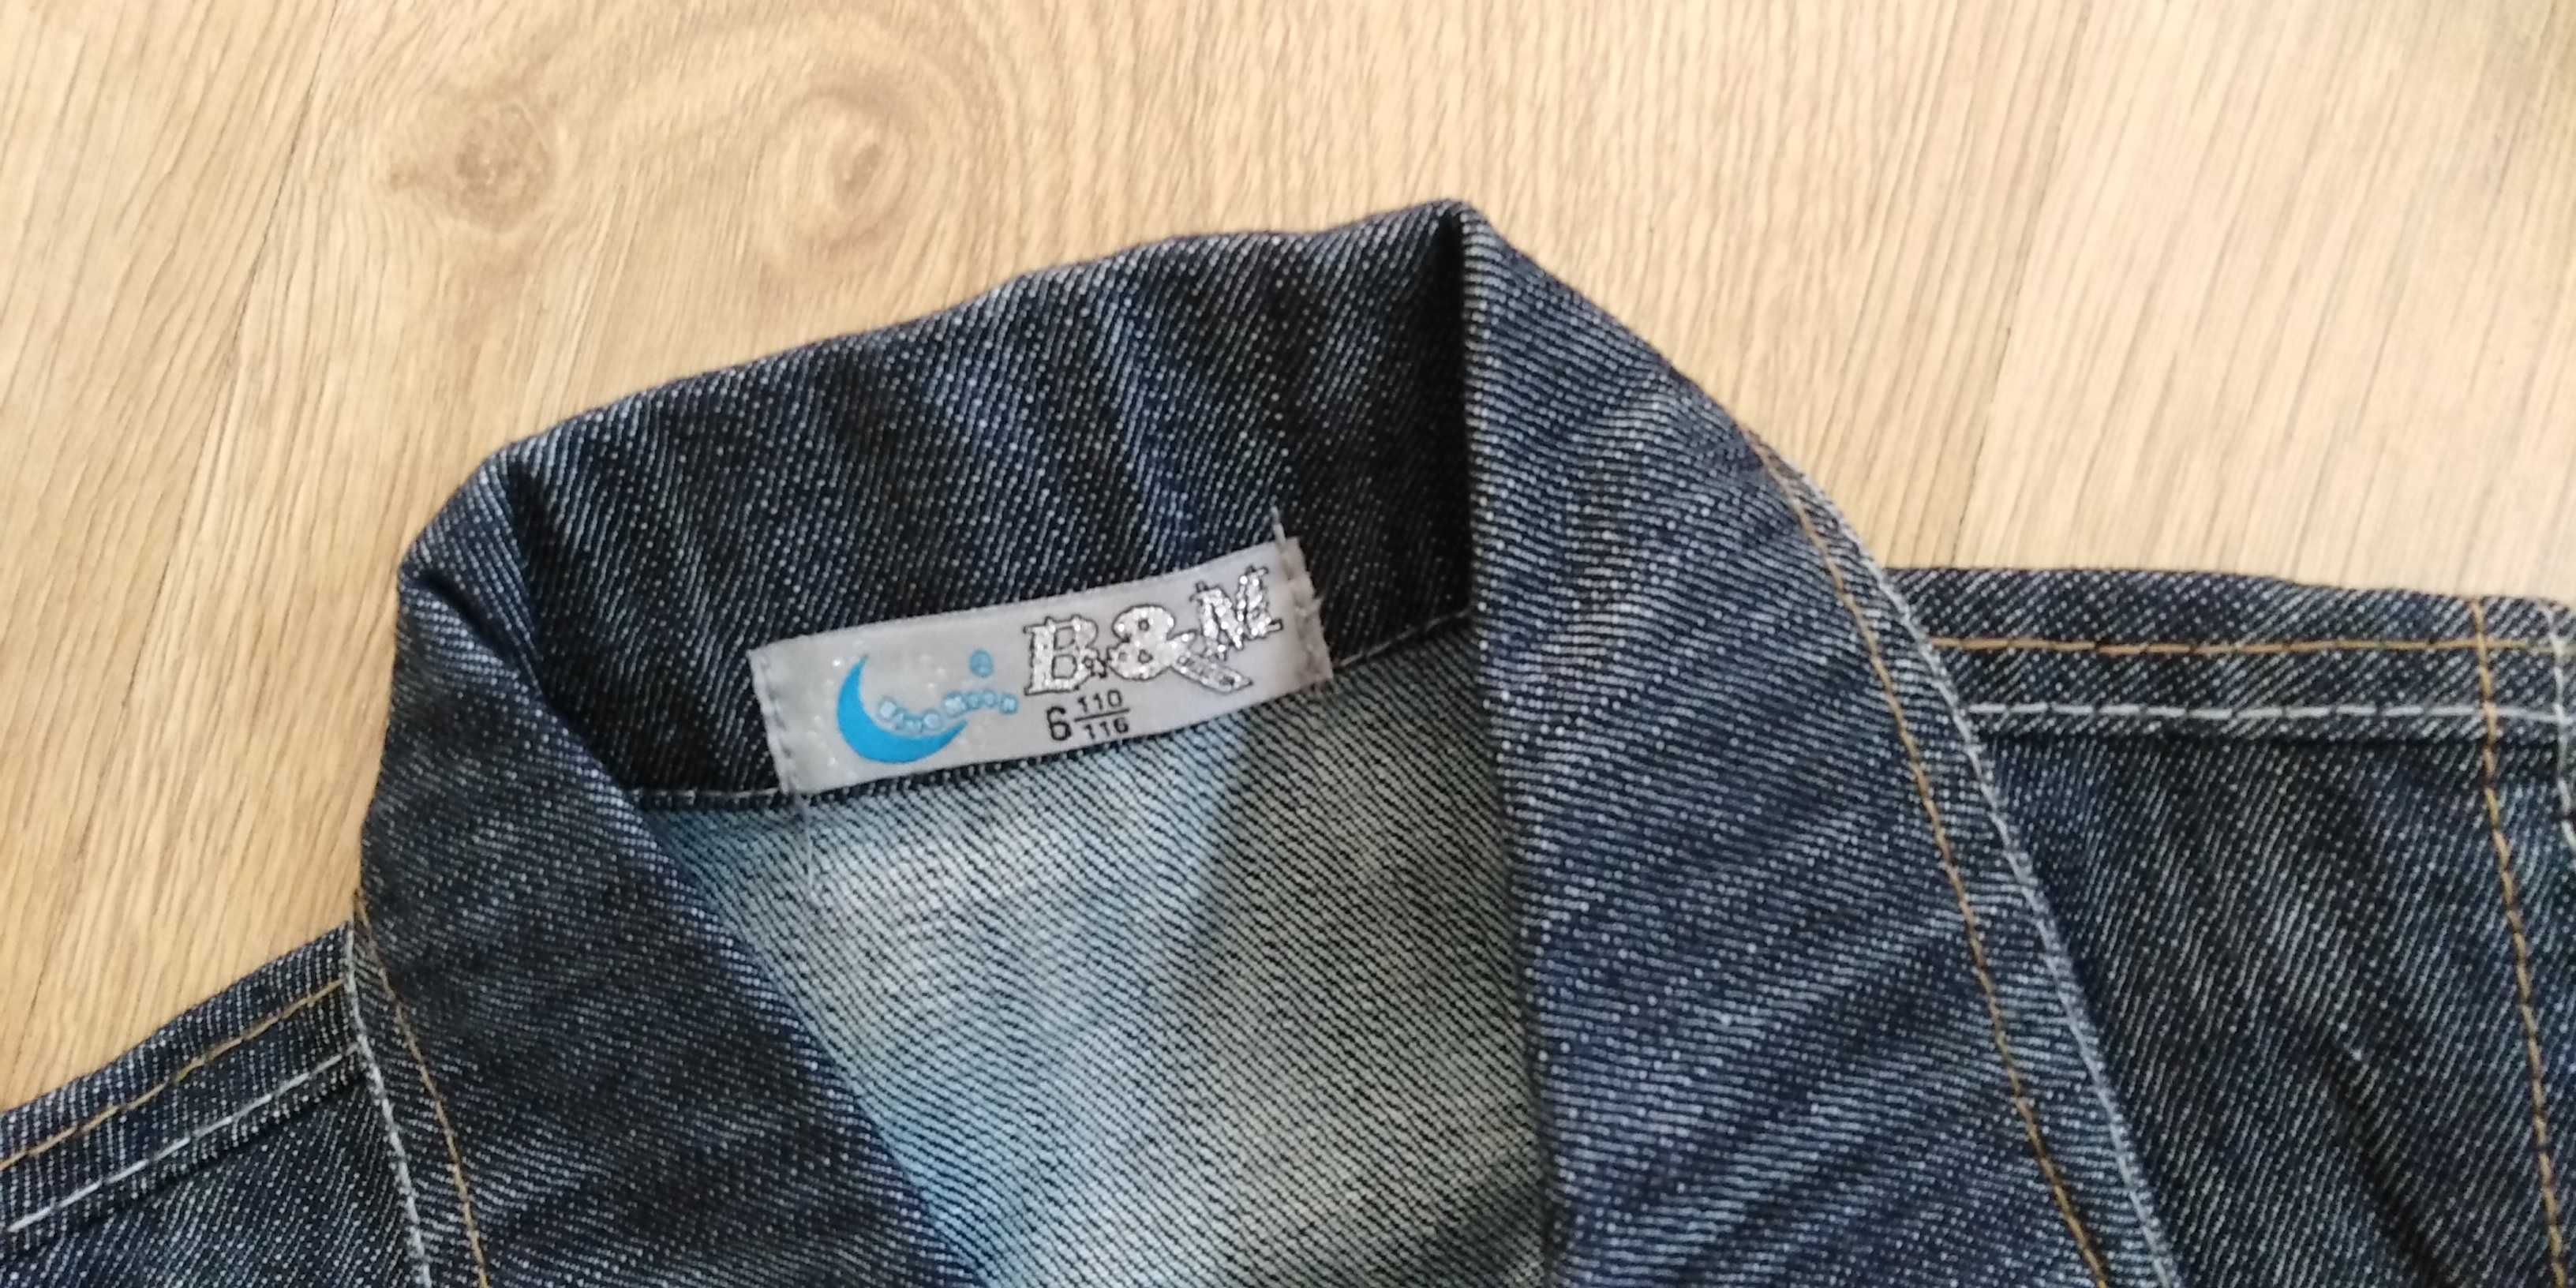 NOWA kurtka jeansowa dla dziecka 110/116-Blue Moon-super!